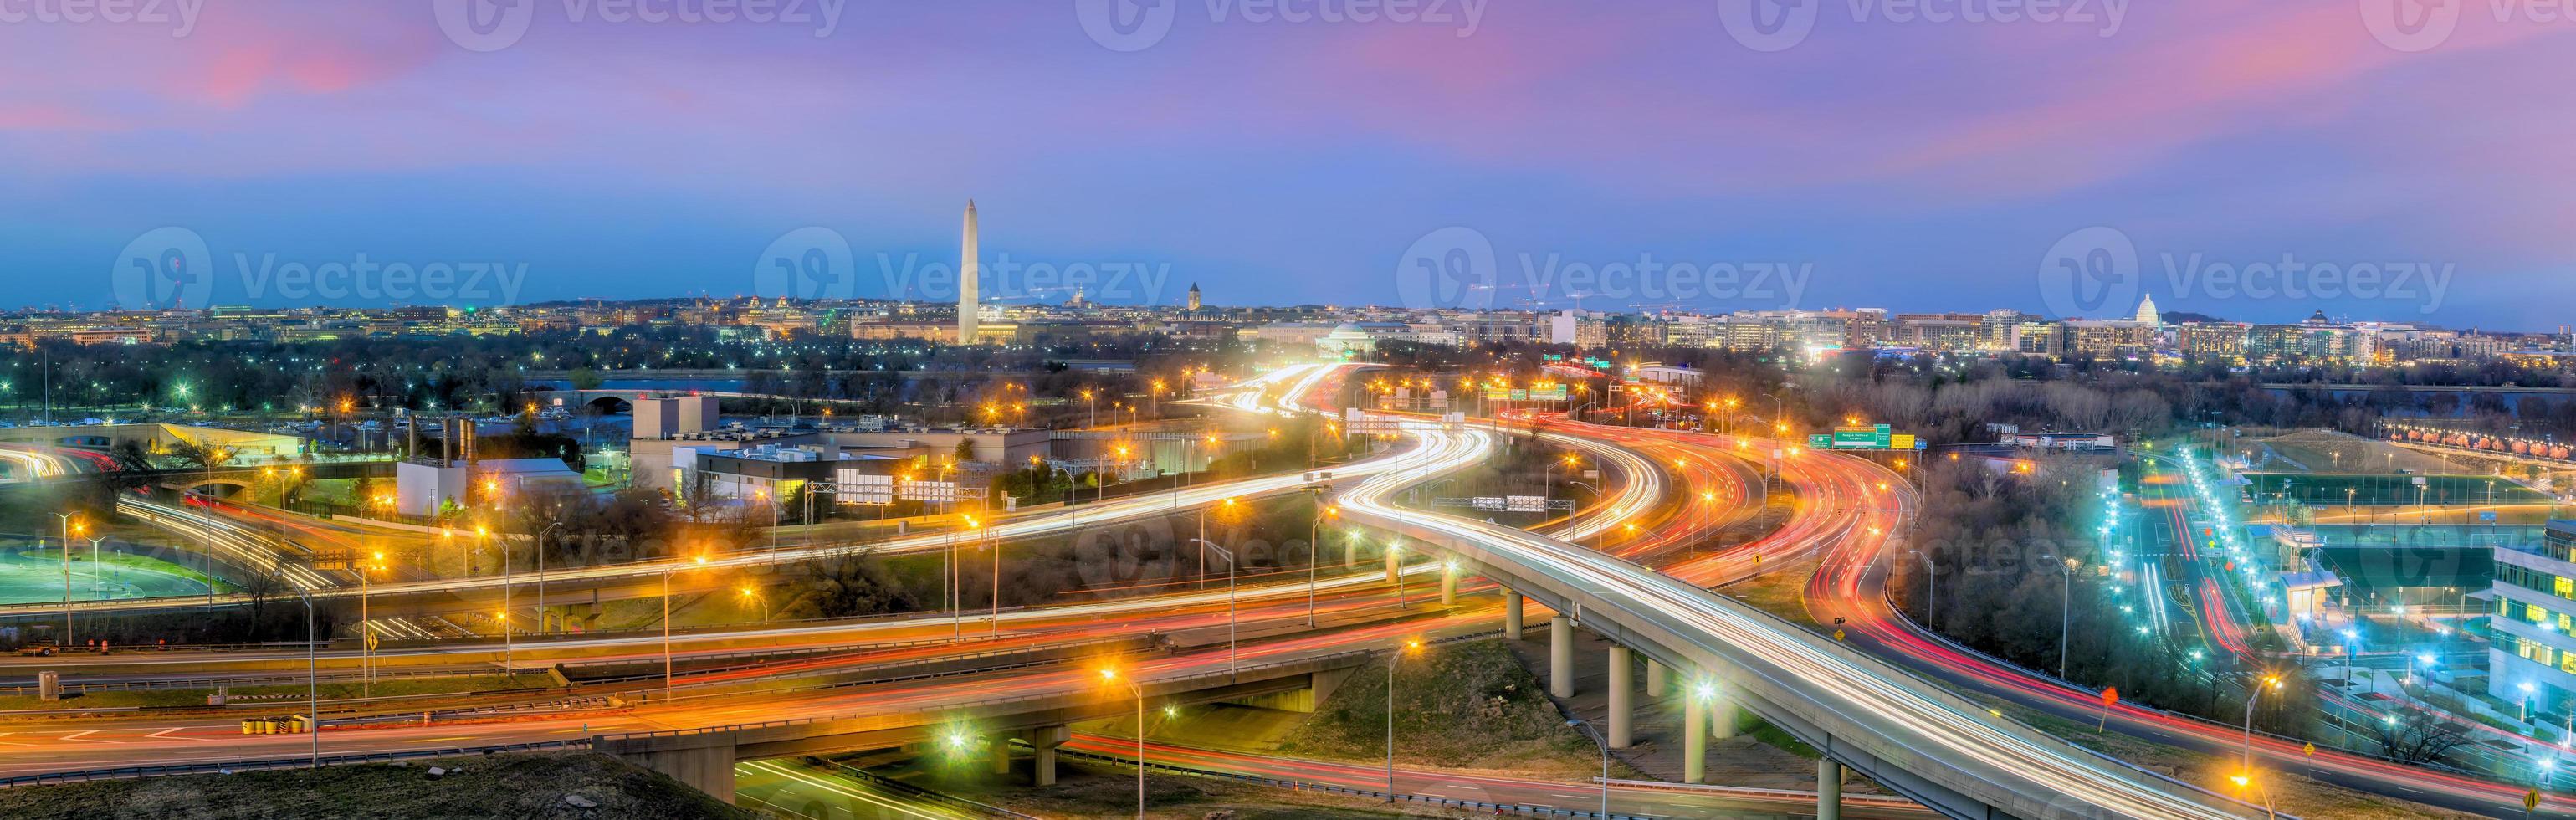 Washington, DC stadssilhuett foto